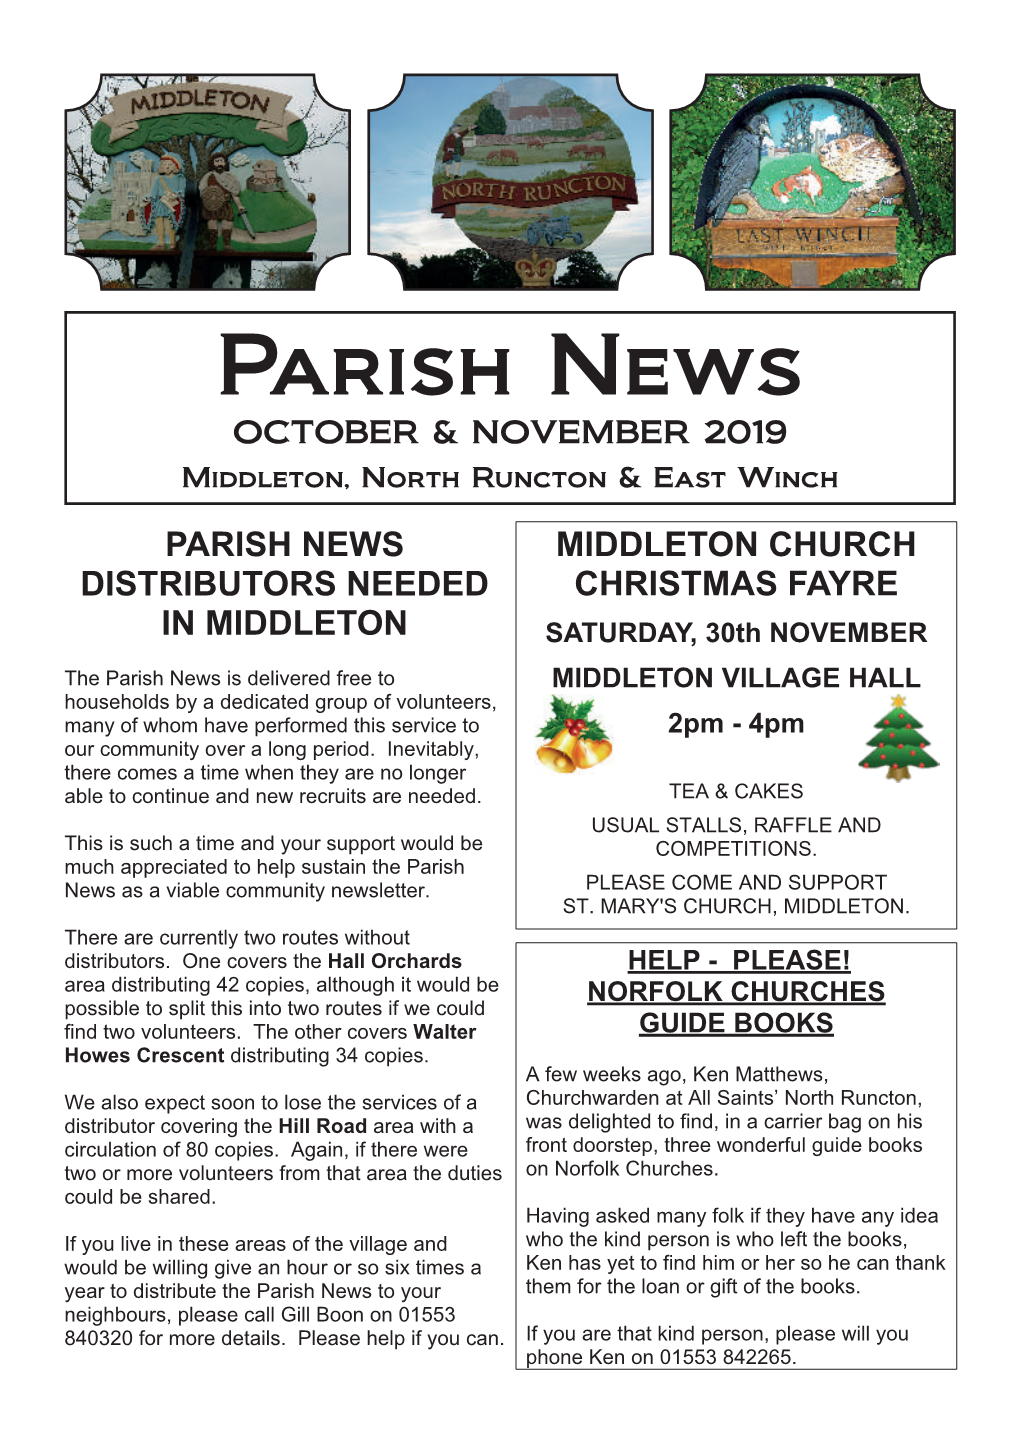 Parish News April & May 2017 Large